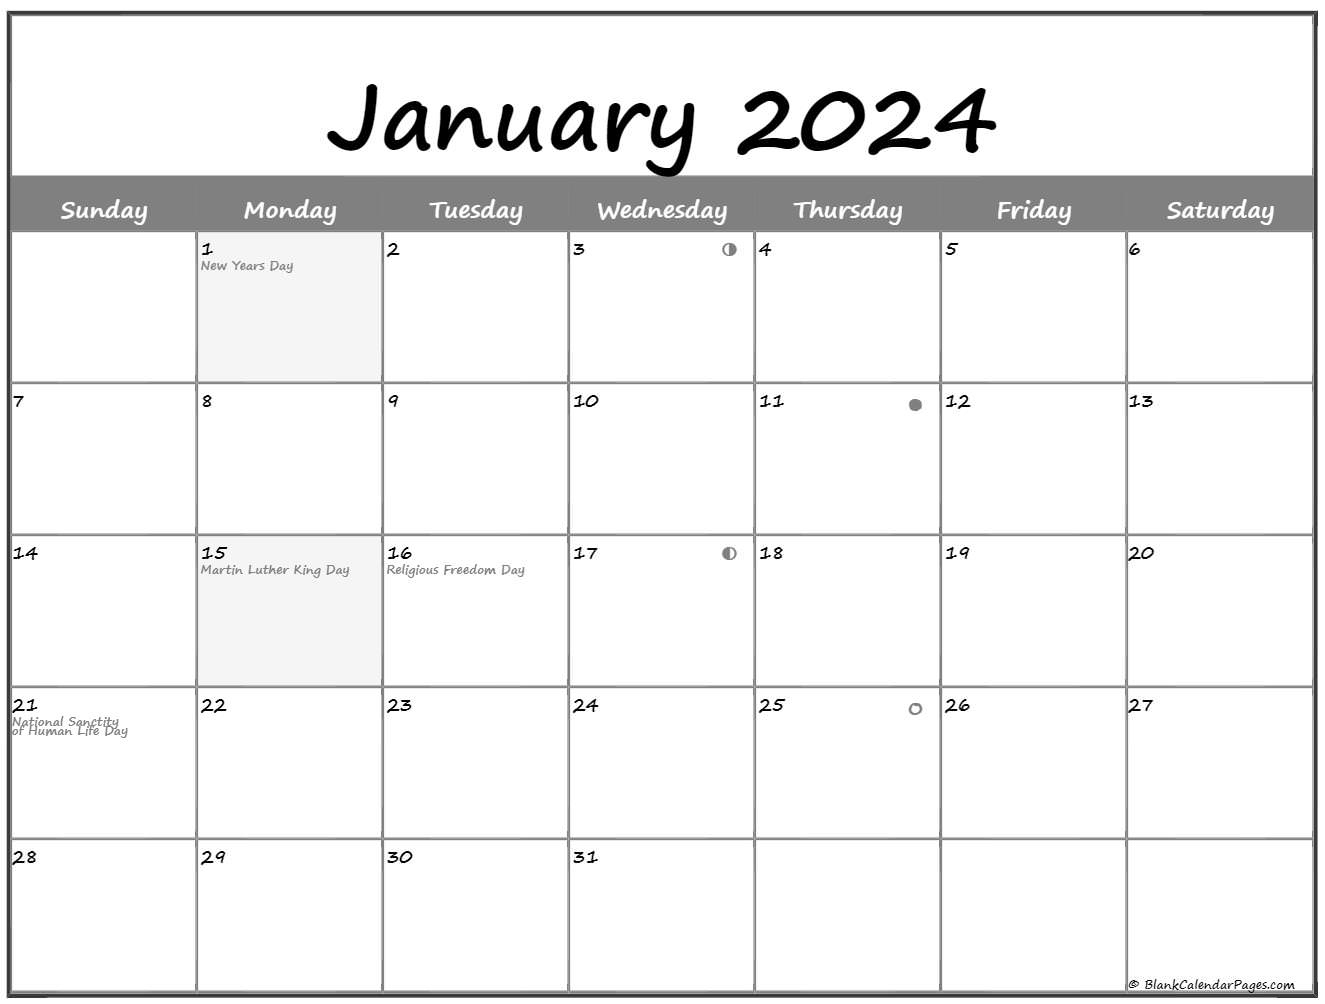 January 2024 Lunar Calendar Moon Phase Calendar | Free Printable 2024 Calendar With Holidays And Moon Phases